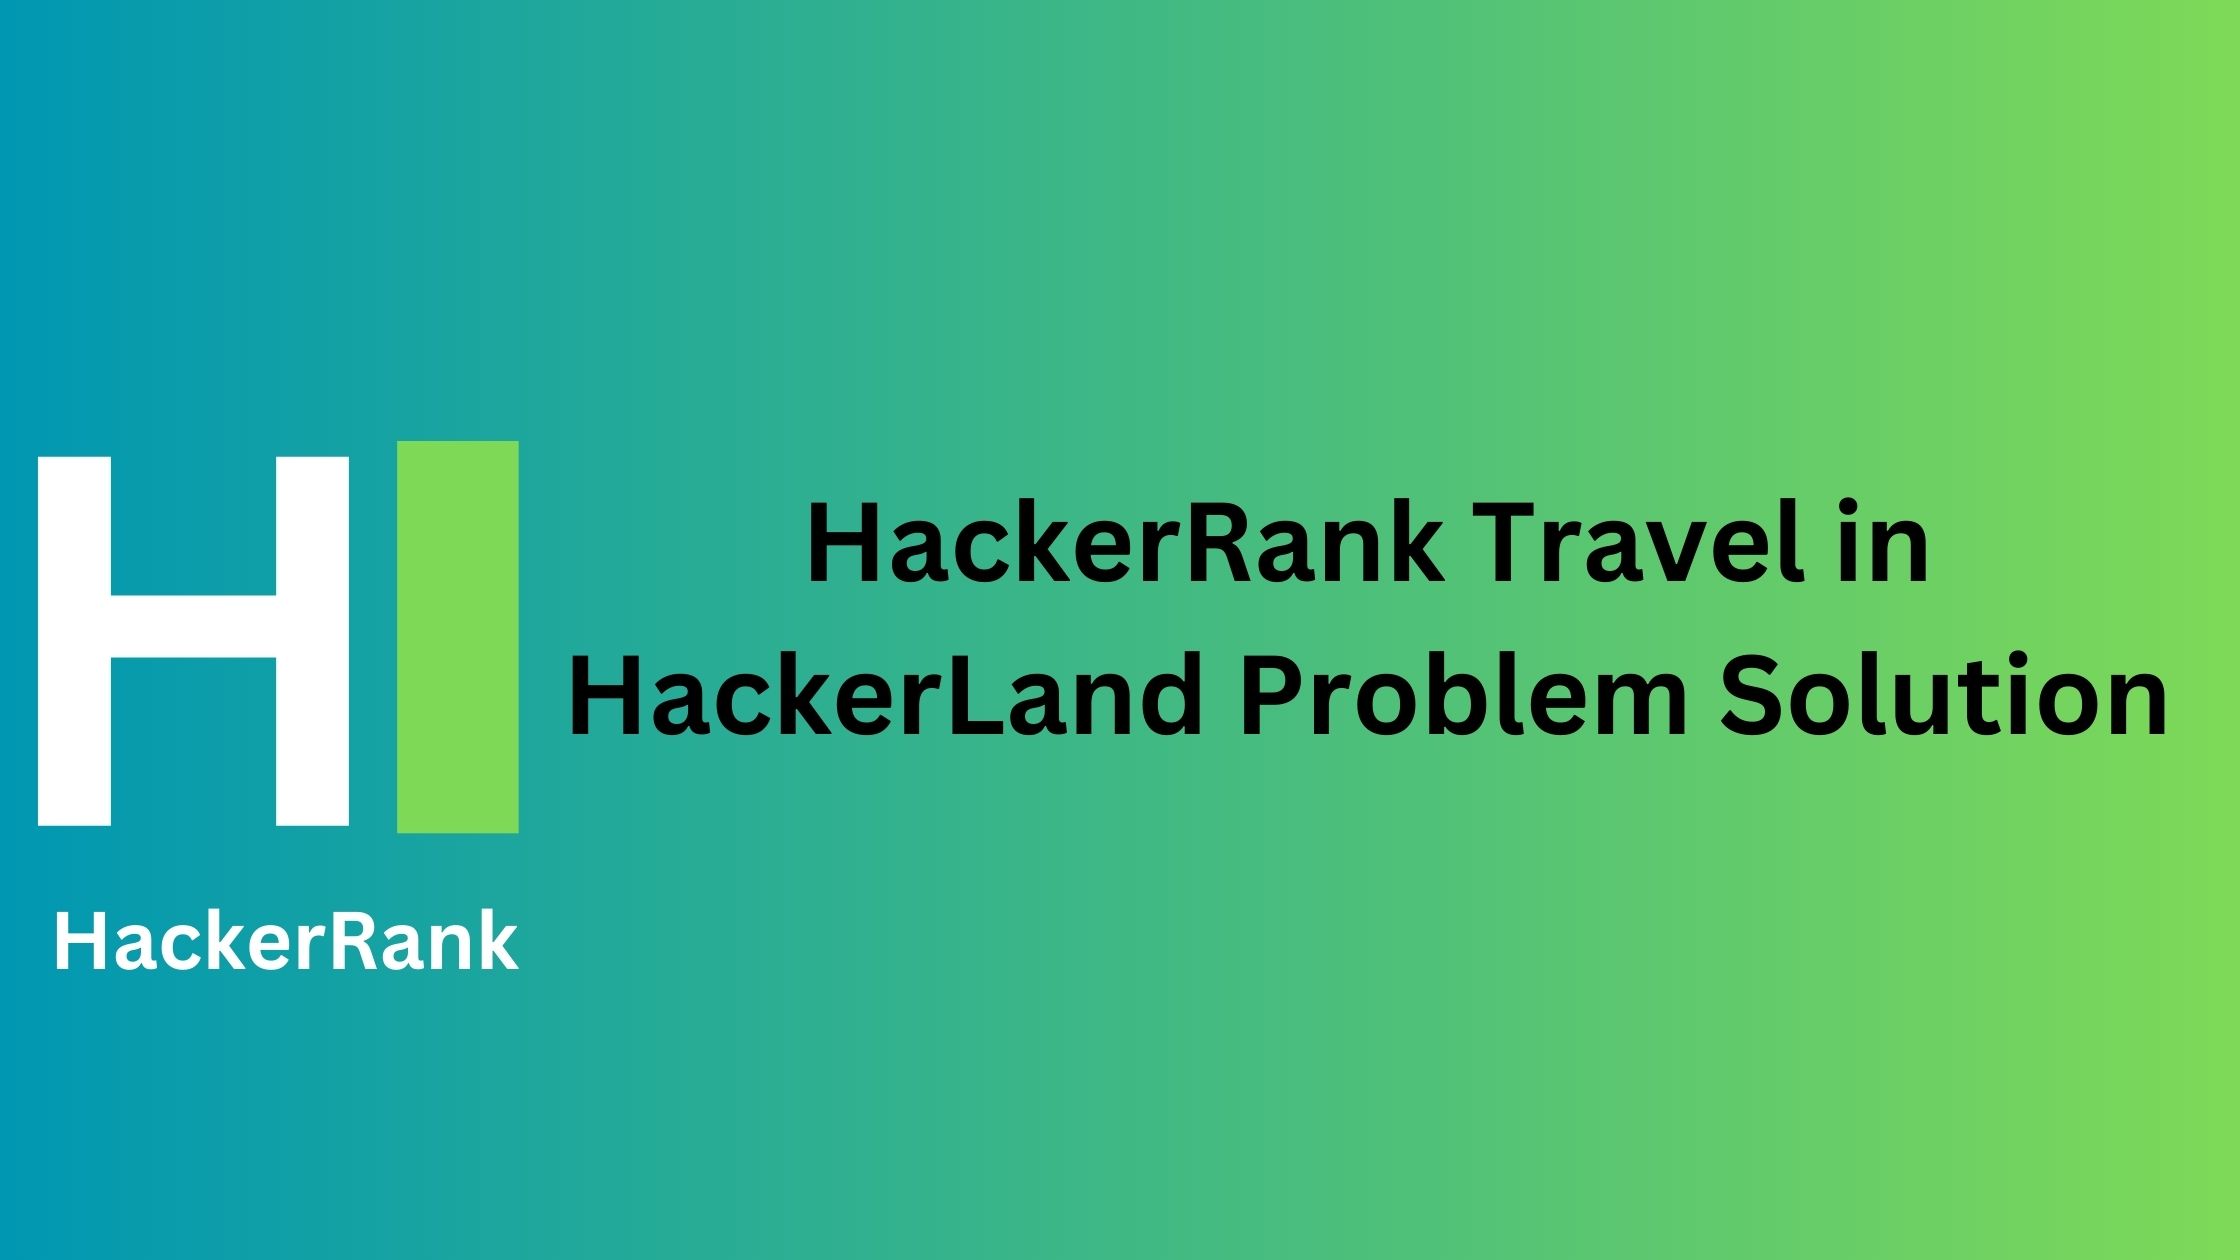 HackerRank Travel in HackerLand Problem Solution